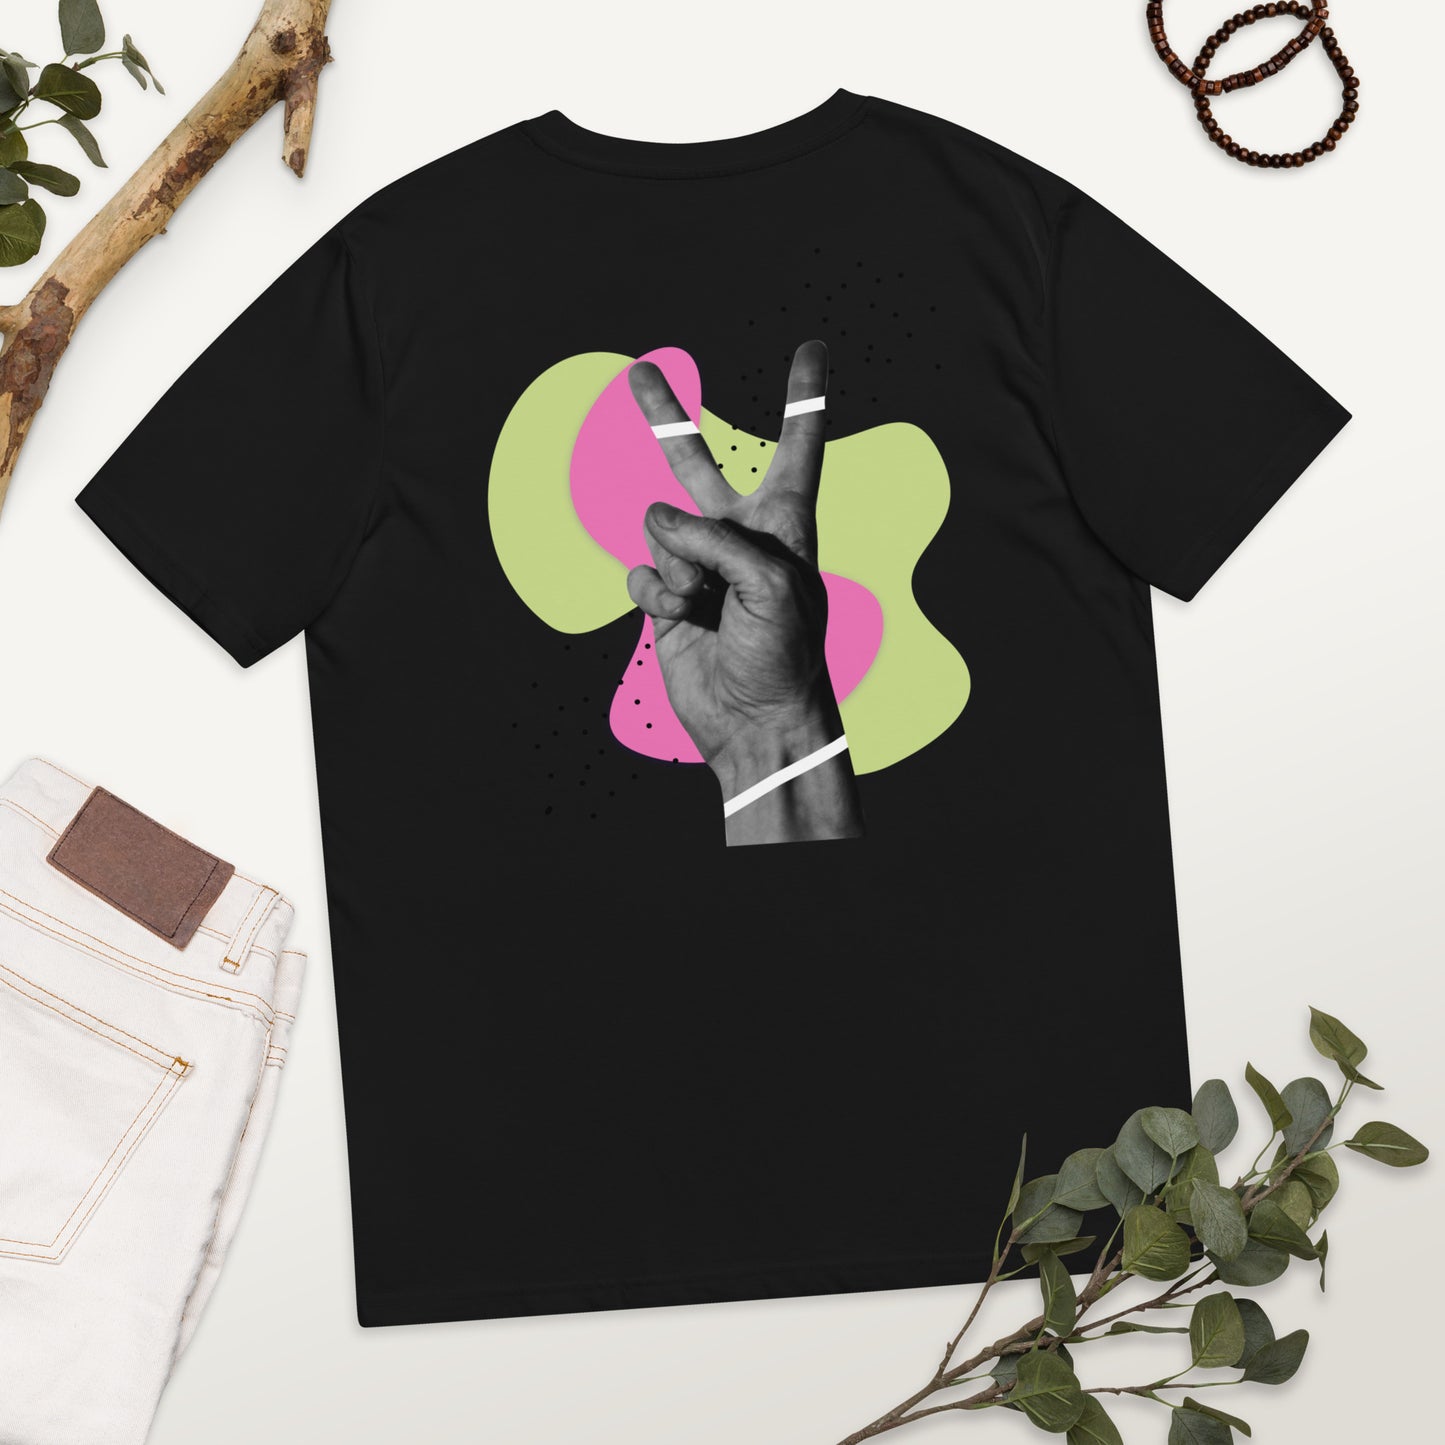 Abstract Peace-Unisex Organic Cotton T-shirt